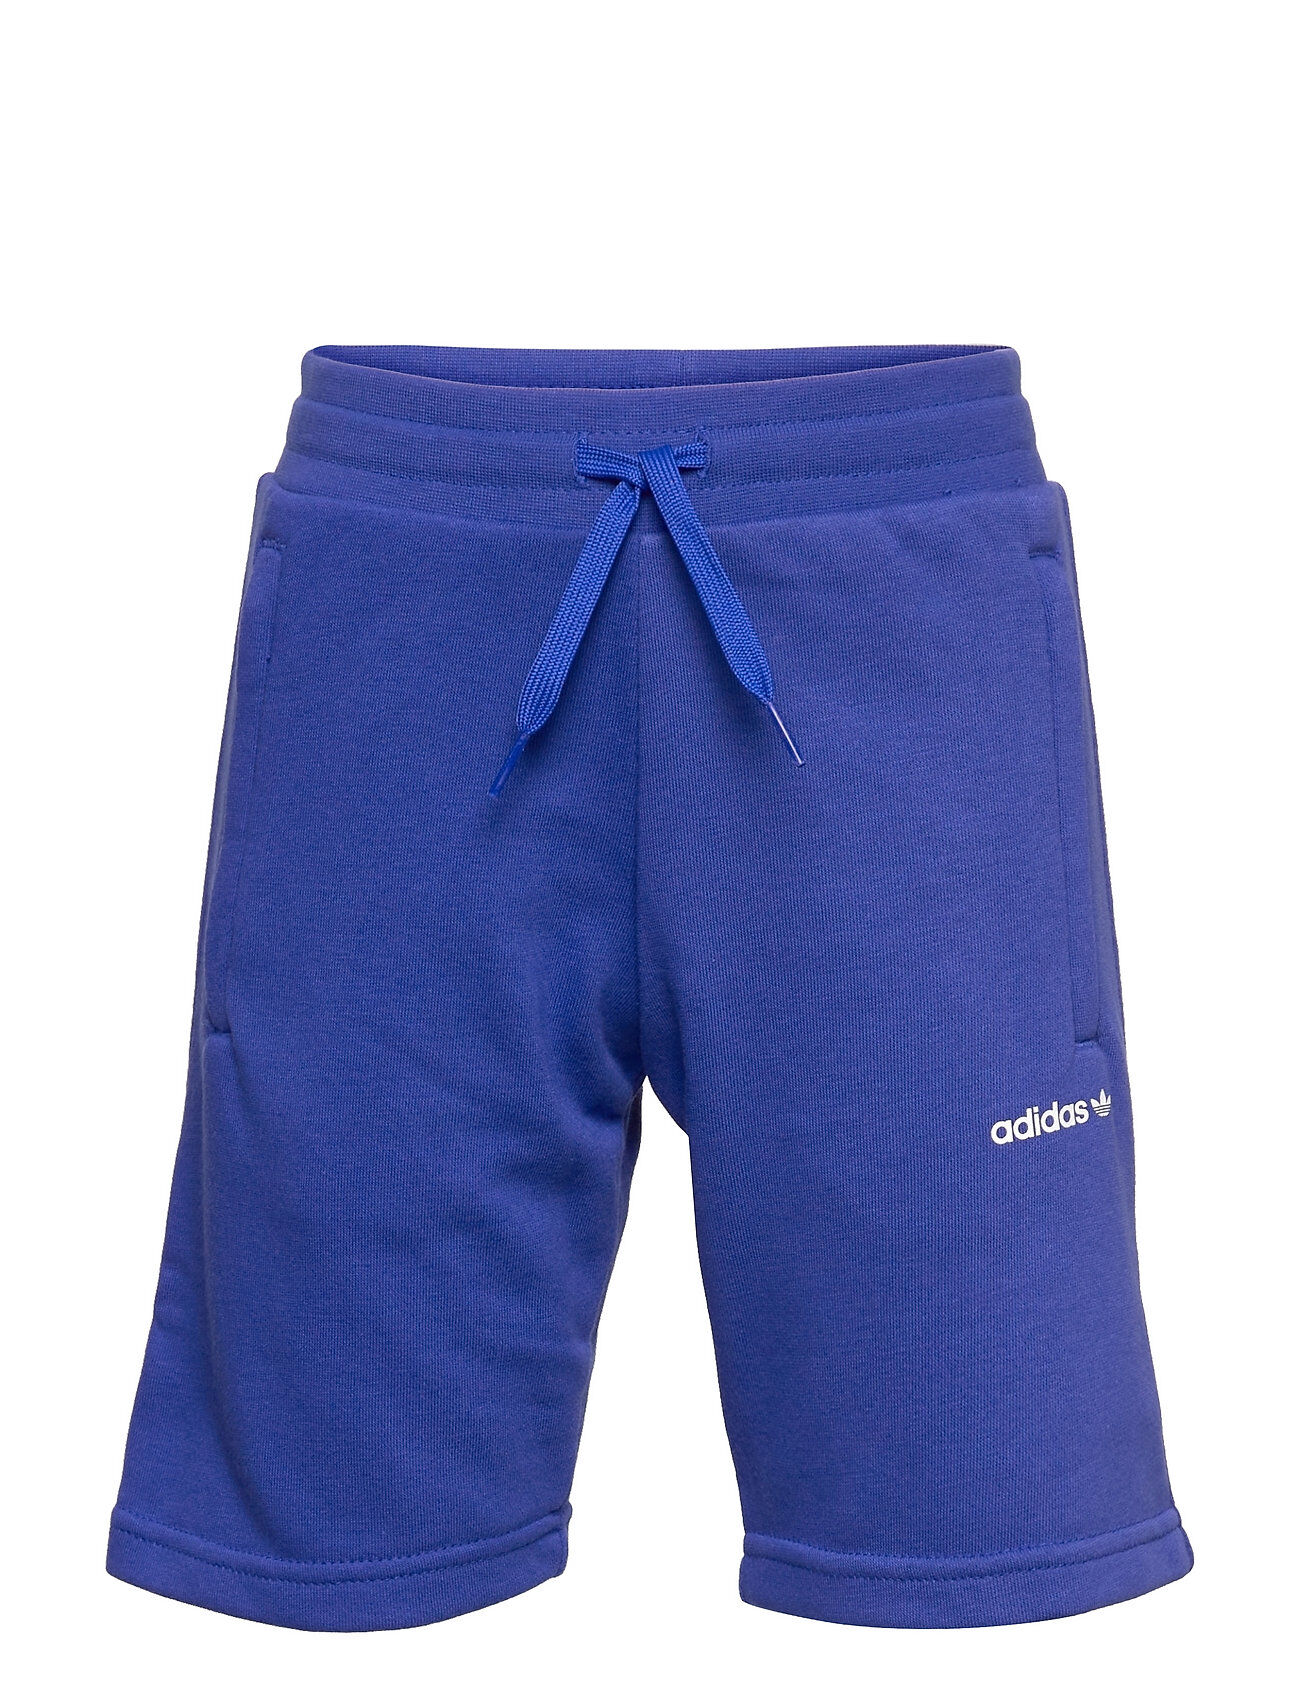 adidas Originals Adicolor Shorts Shorts Sweat Shorts Blå Adidas Originals